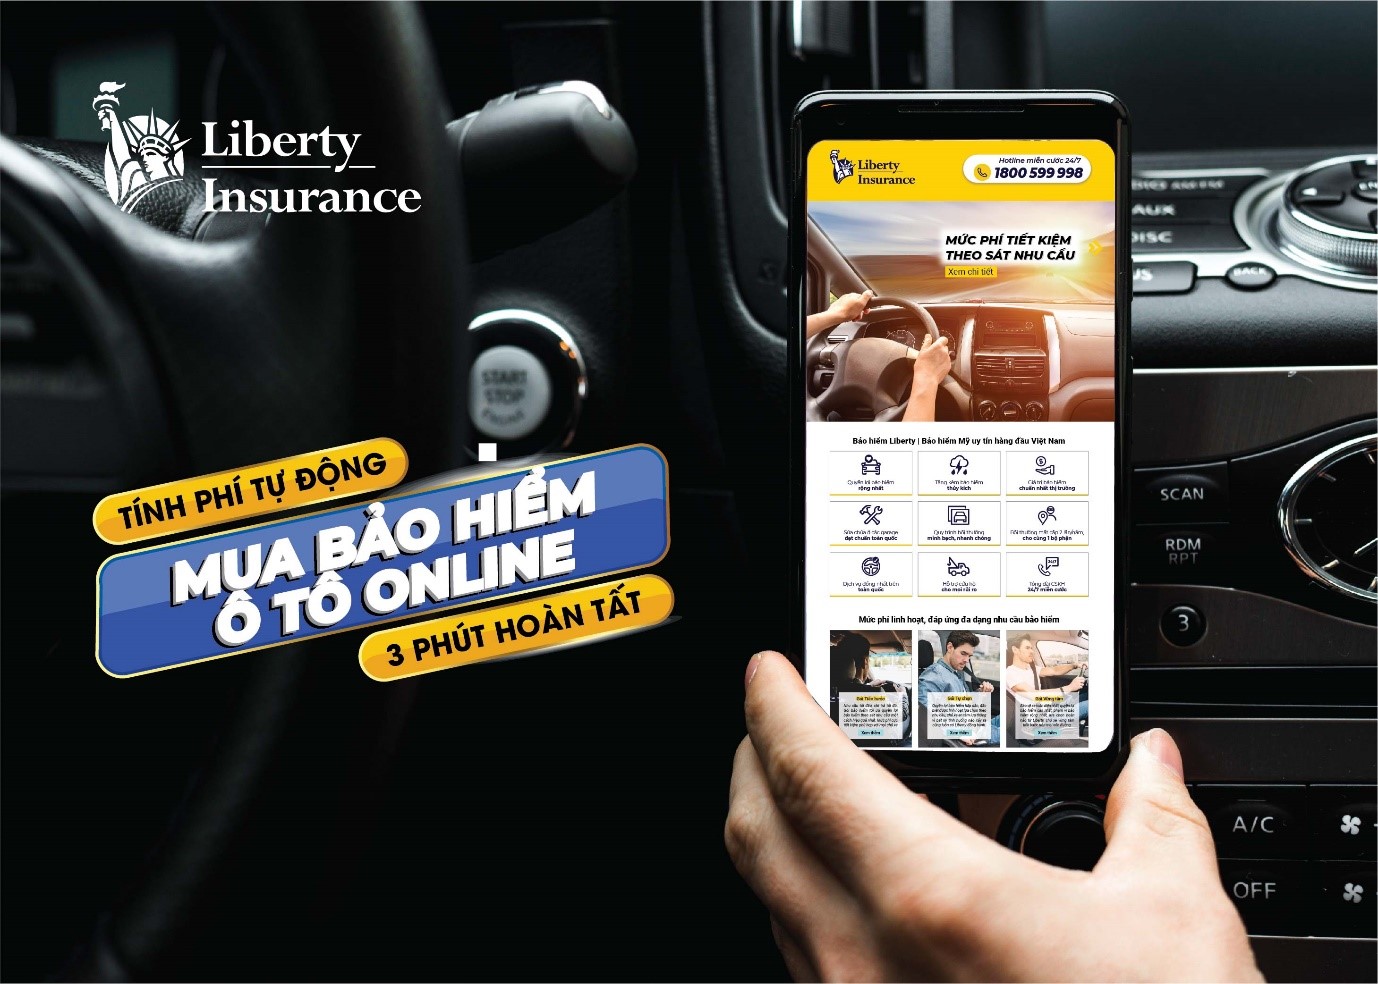 Liberty online car purchasing platform